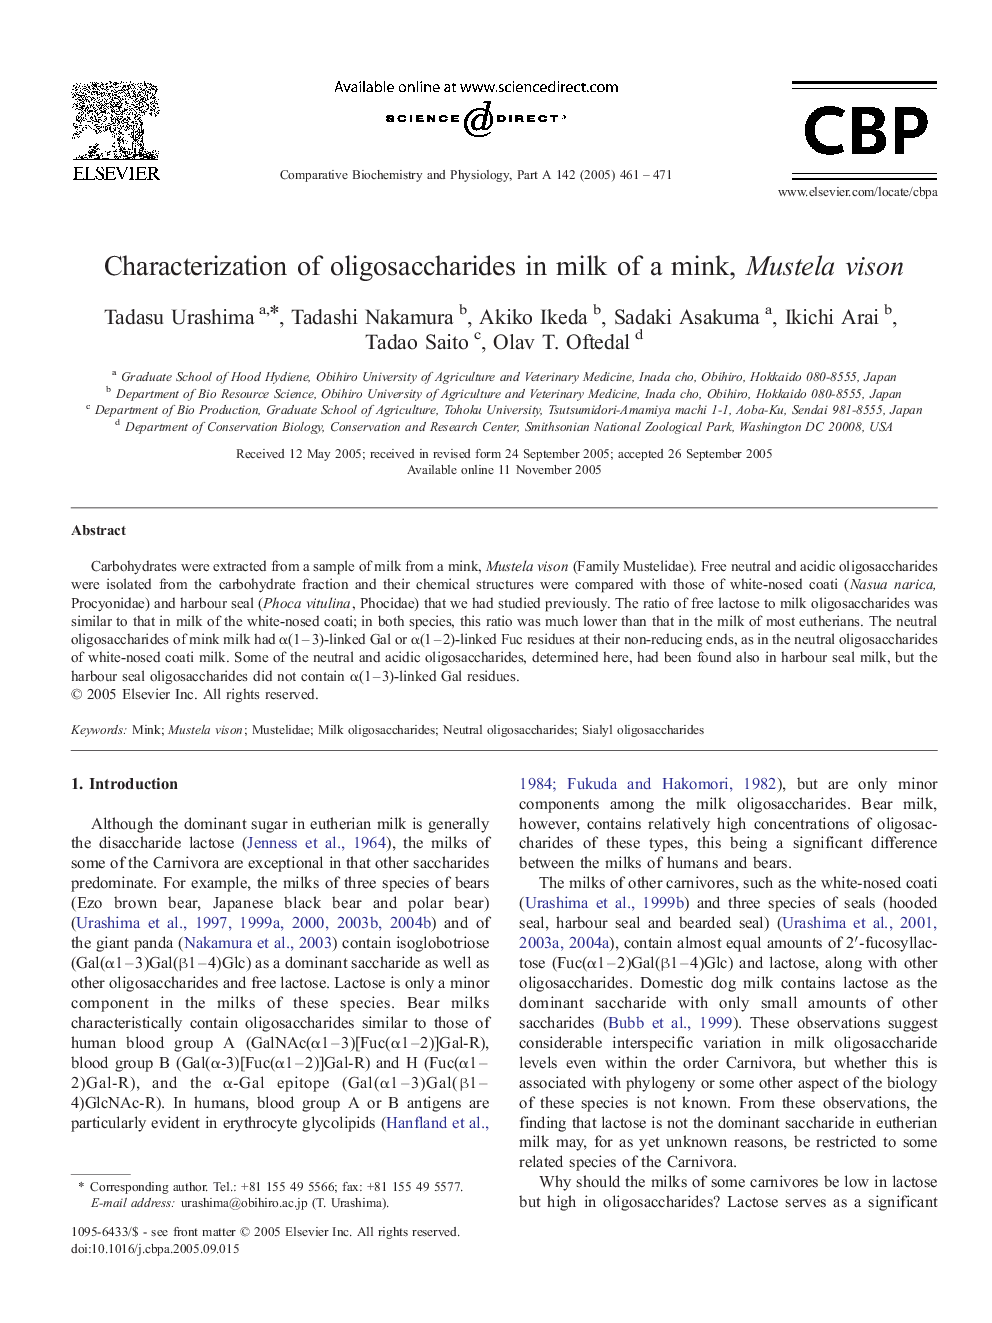 Characterization of oligosaccharides in milk of a mink, Mustela vison